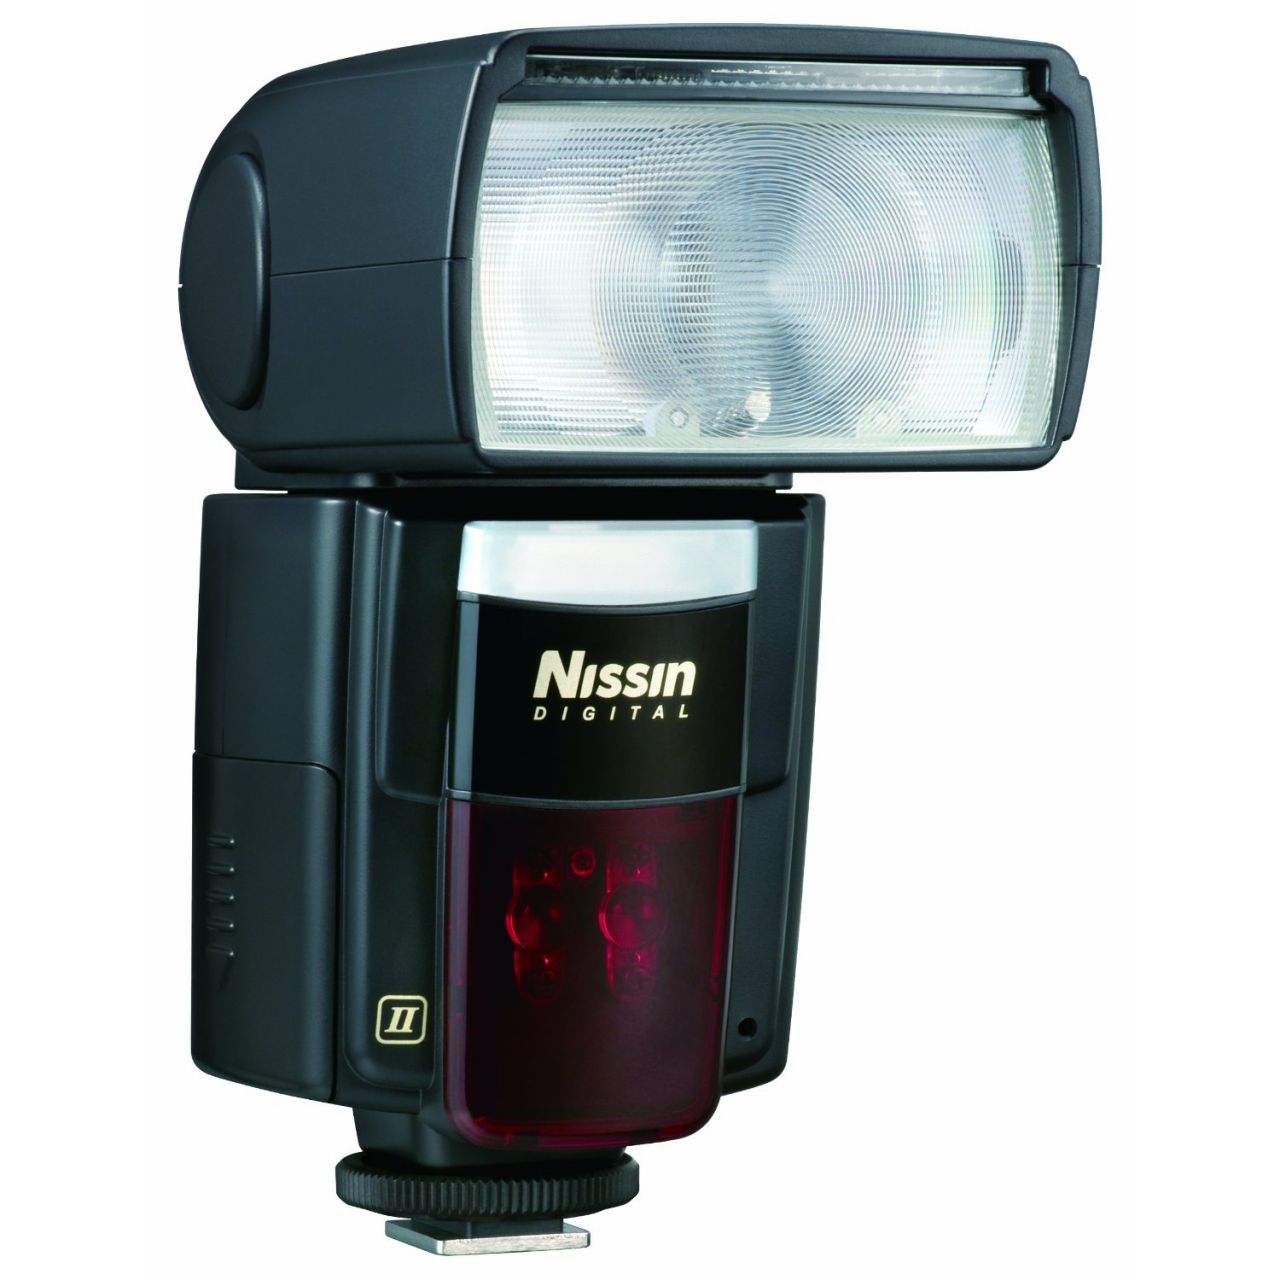 Nissin Di866 Mark II Tepe Flaşı Nikon Uyumlu